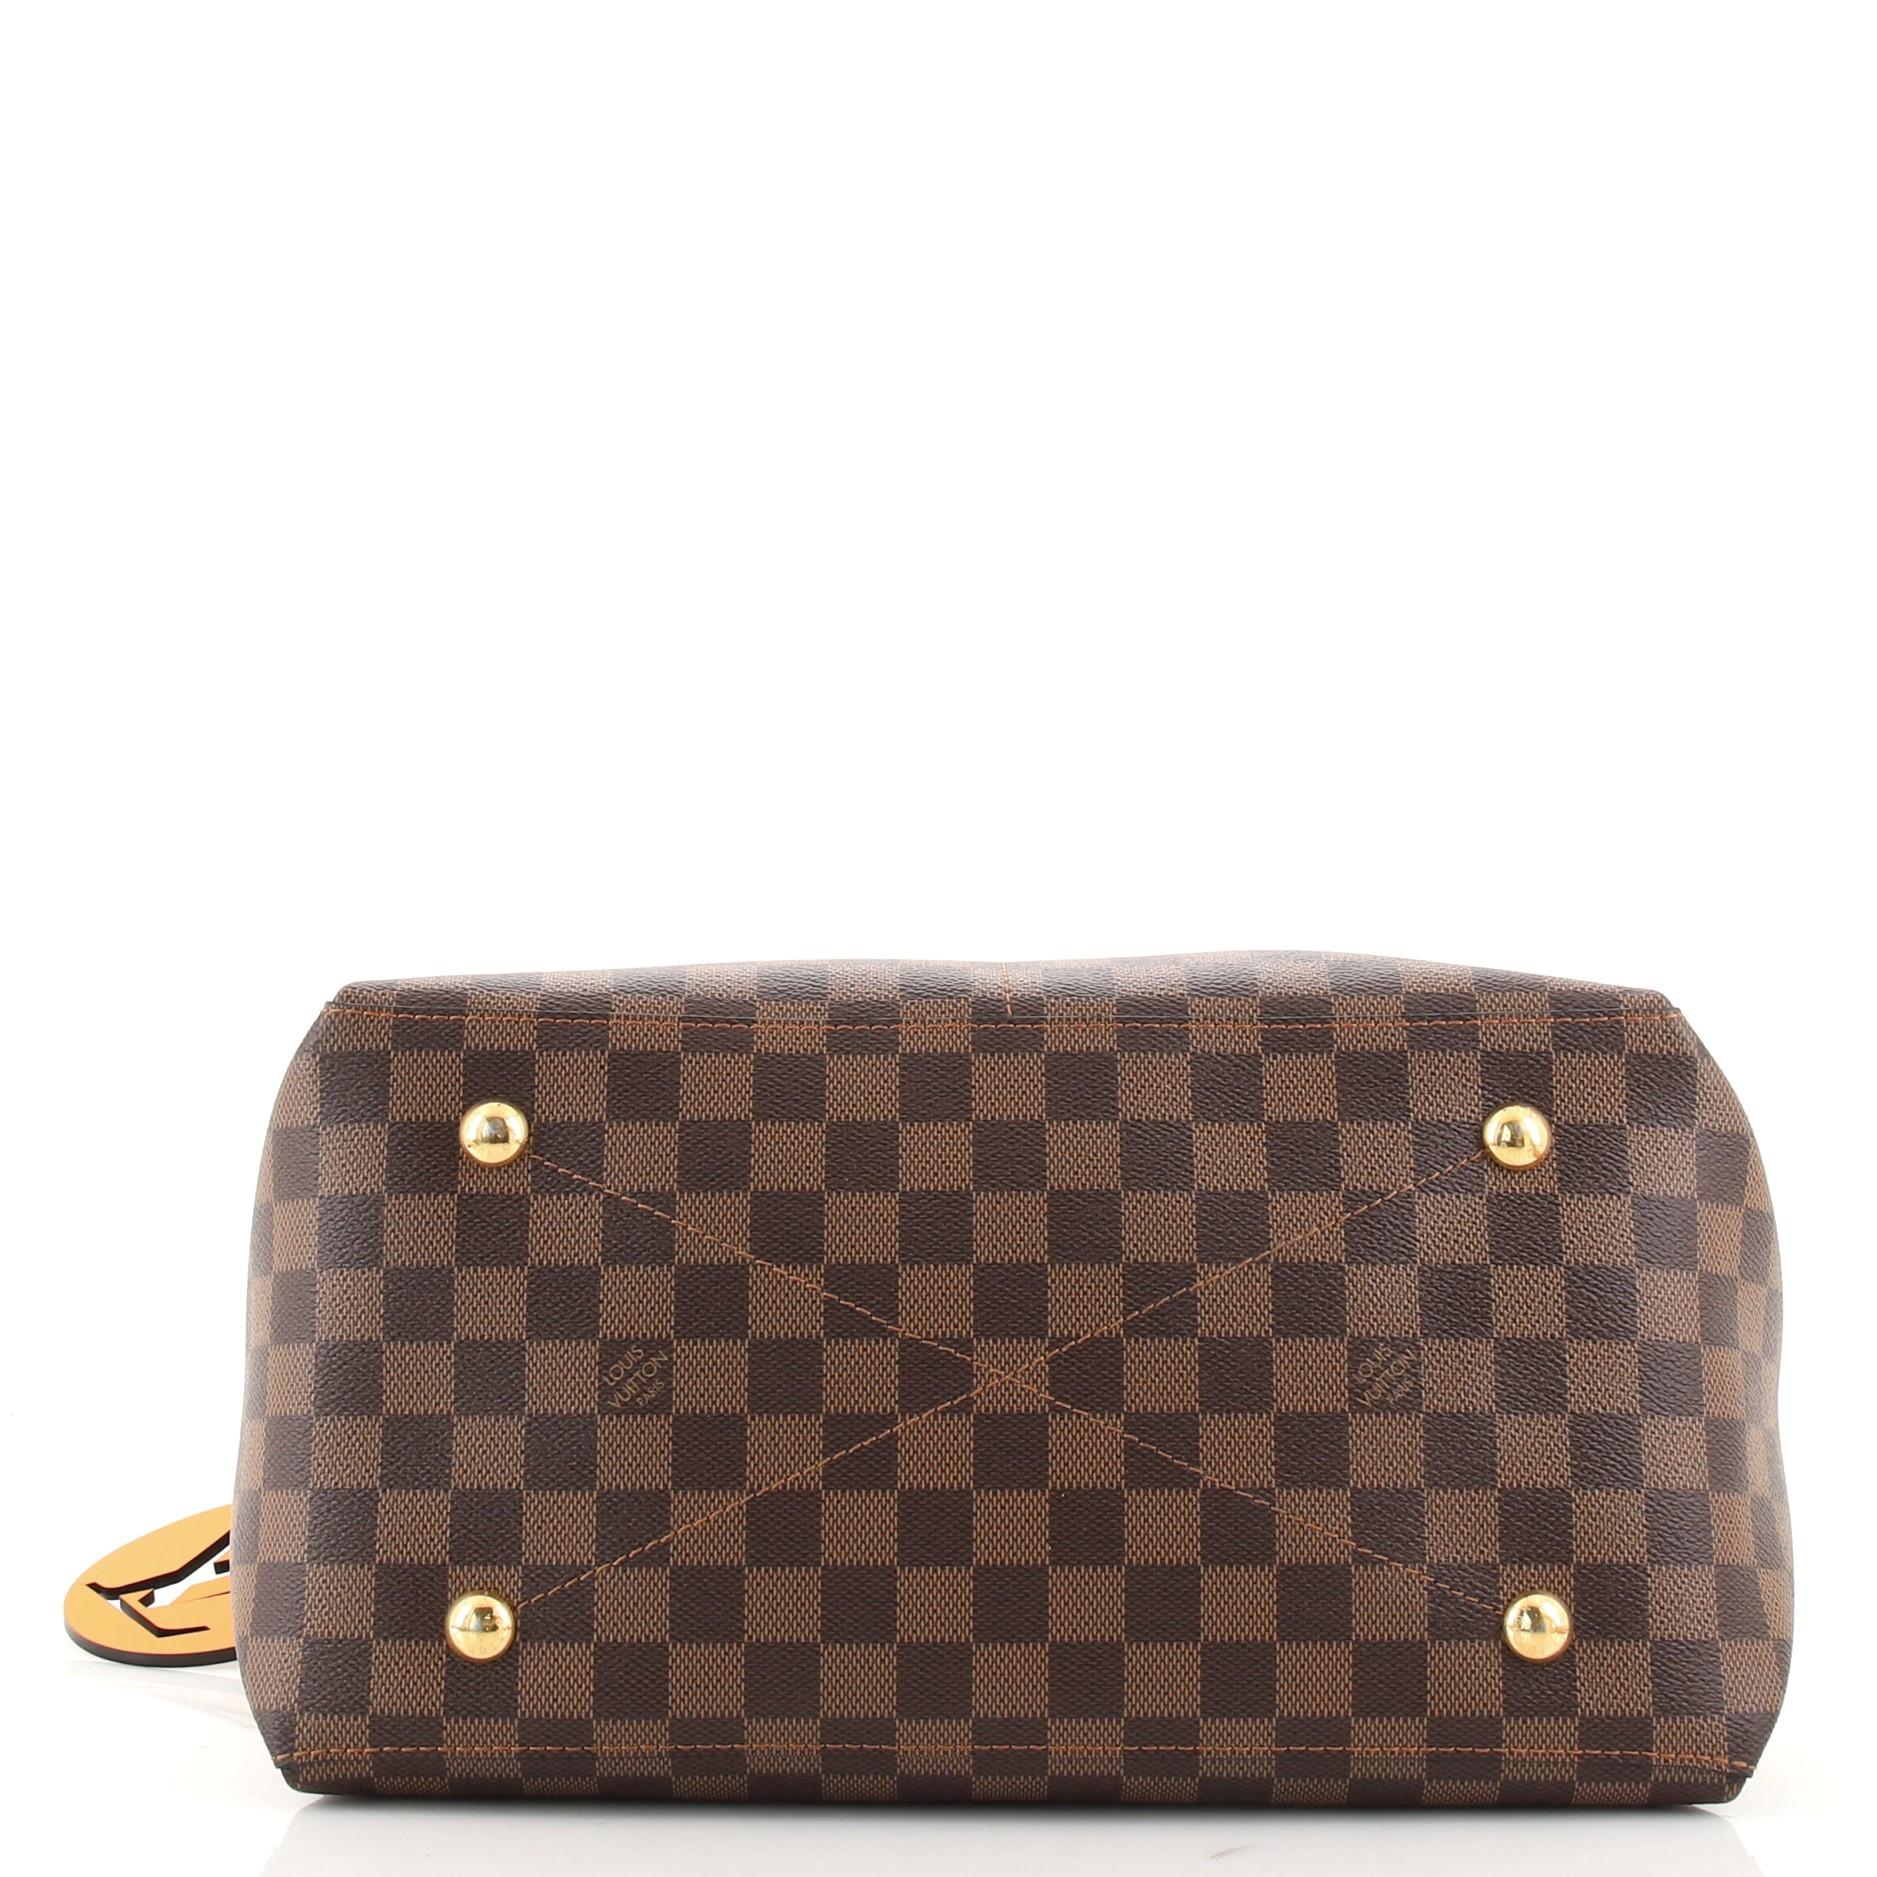 Black Louis Vuitton Maida Handbag Damier with Leather